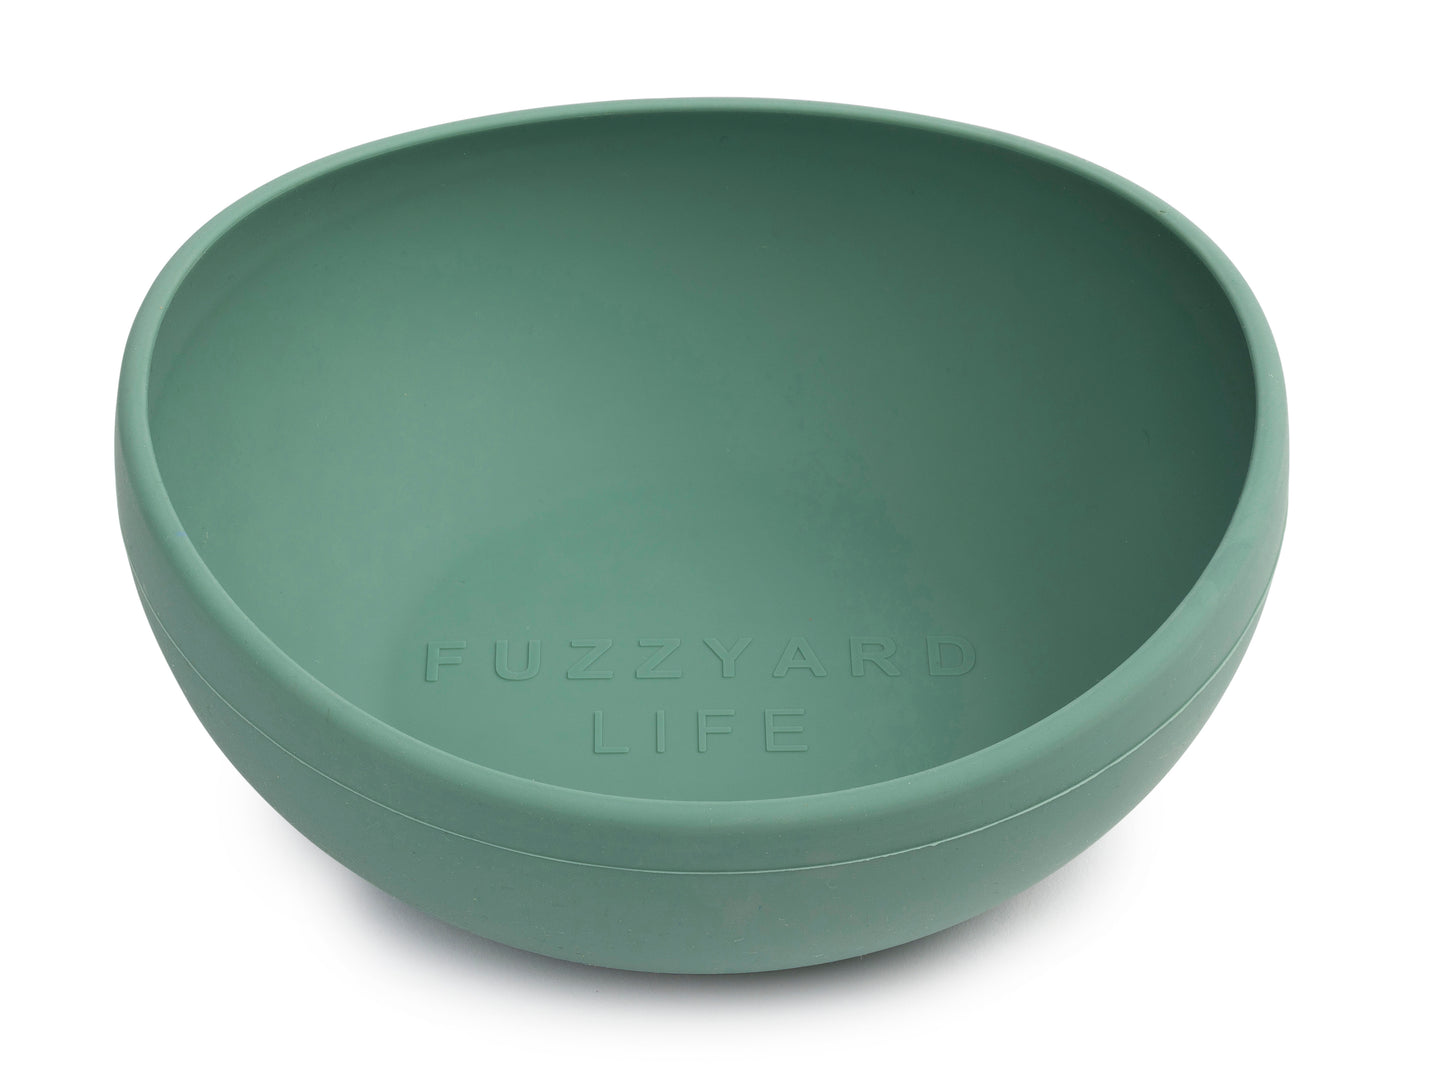 FuzzYard Life Silicone Dog Feeding Bowl - Myrtle Green (3 Sizes)